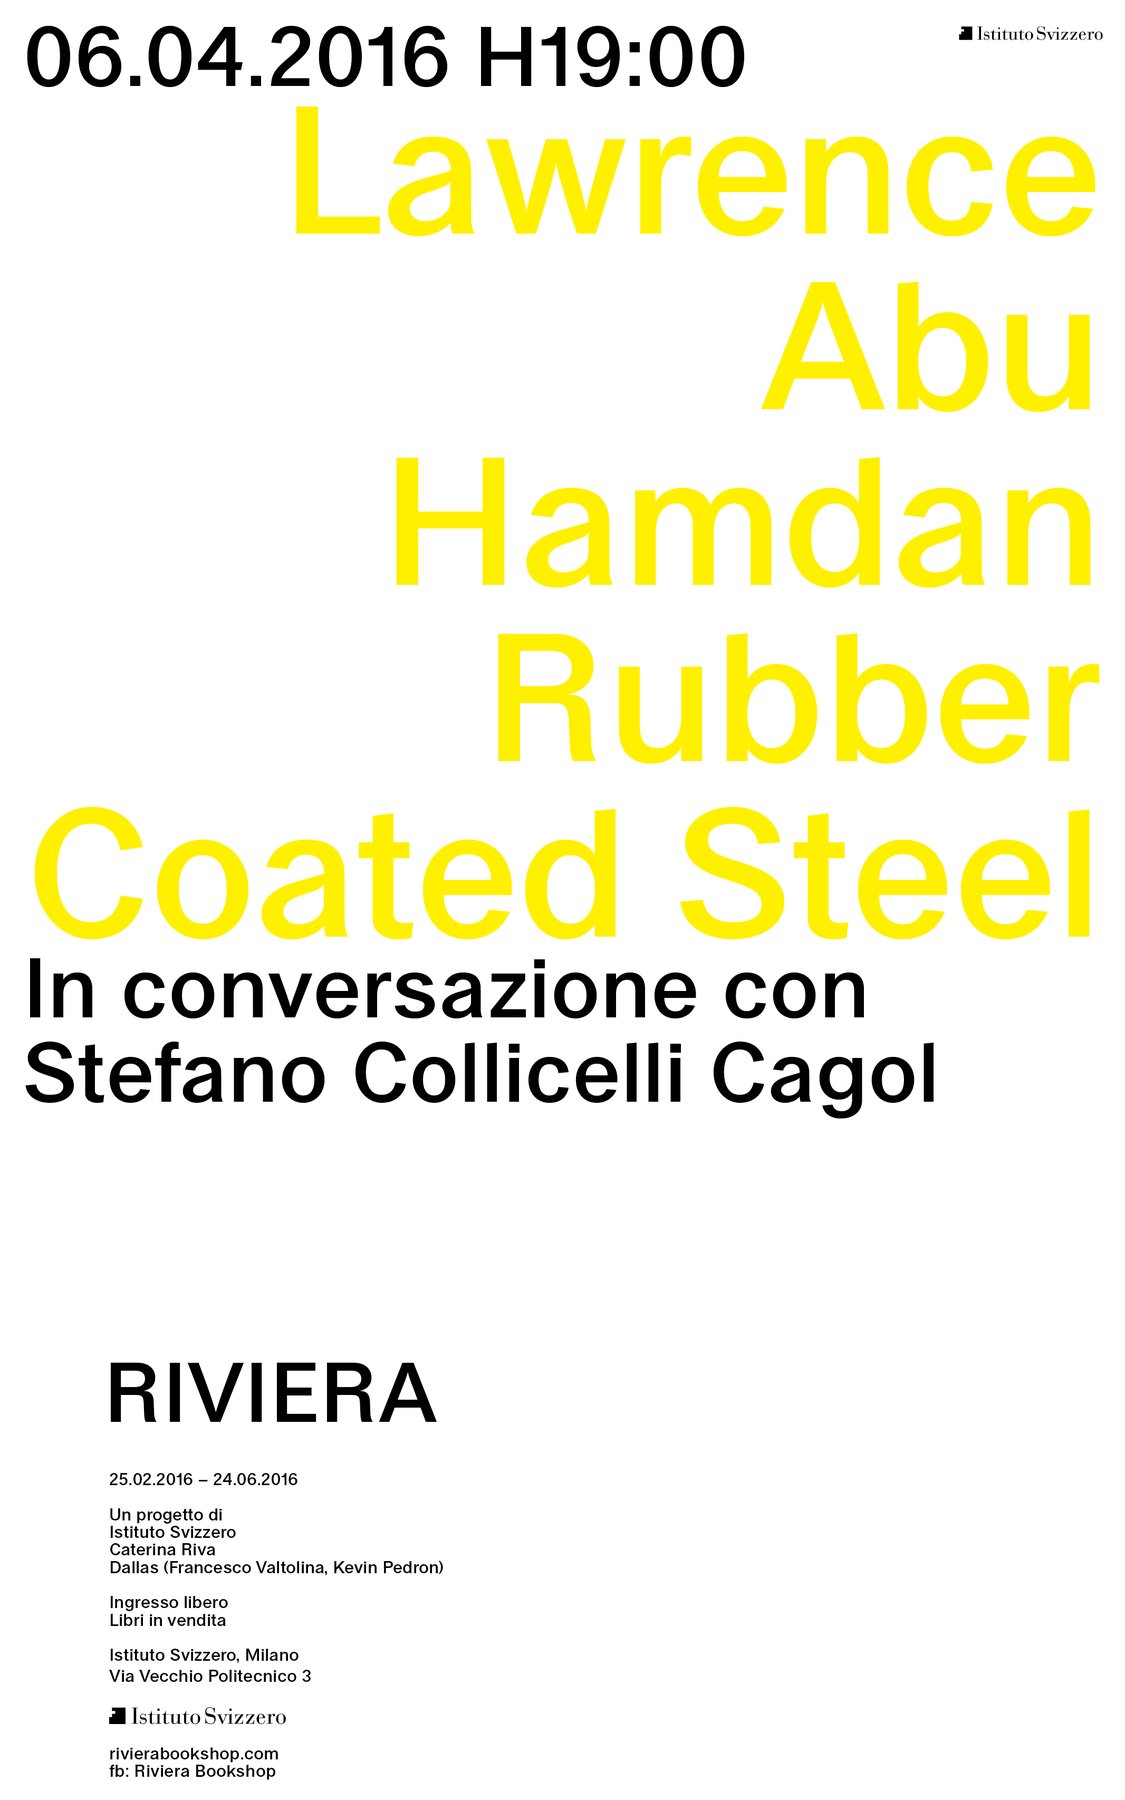 Rubber Coated Steel